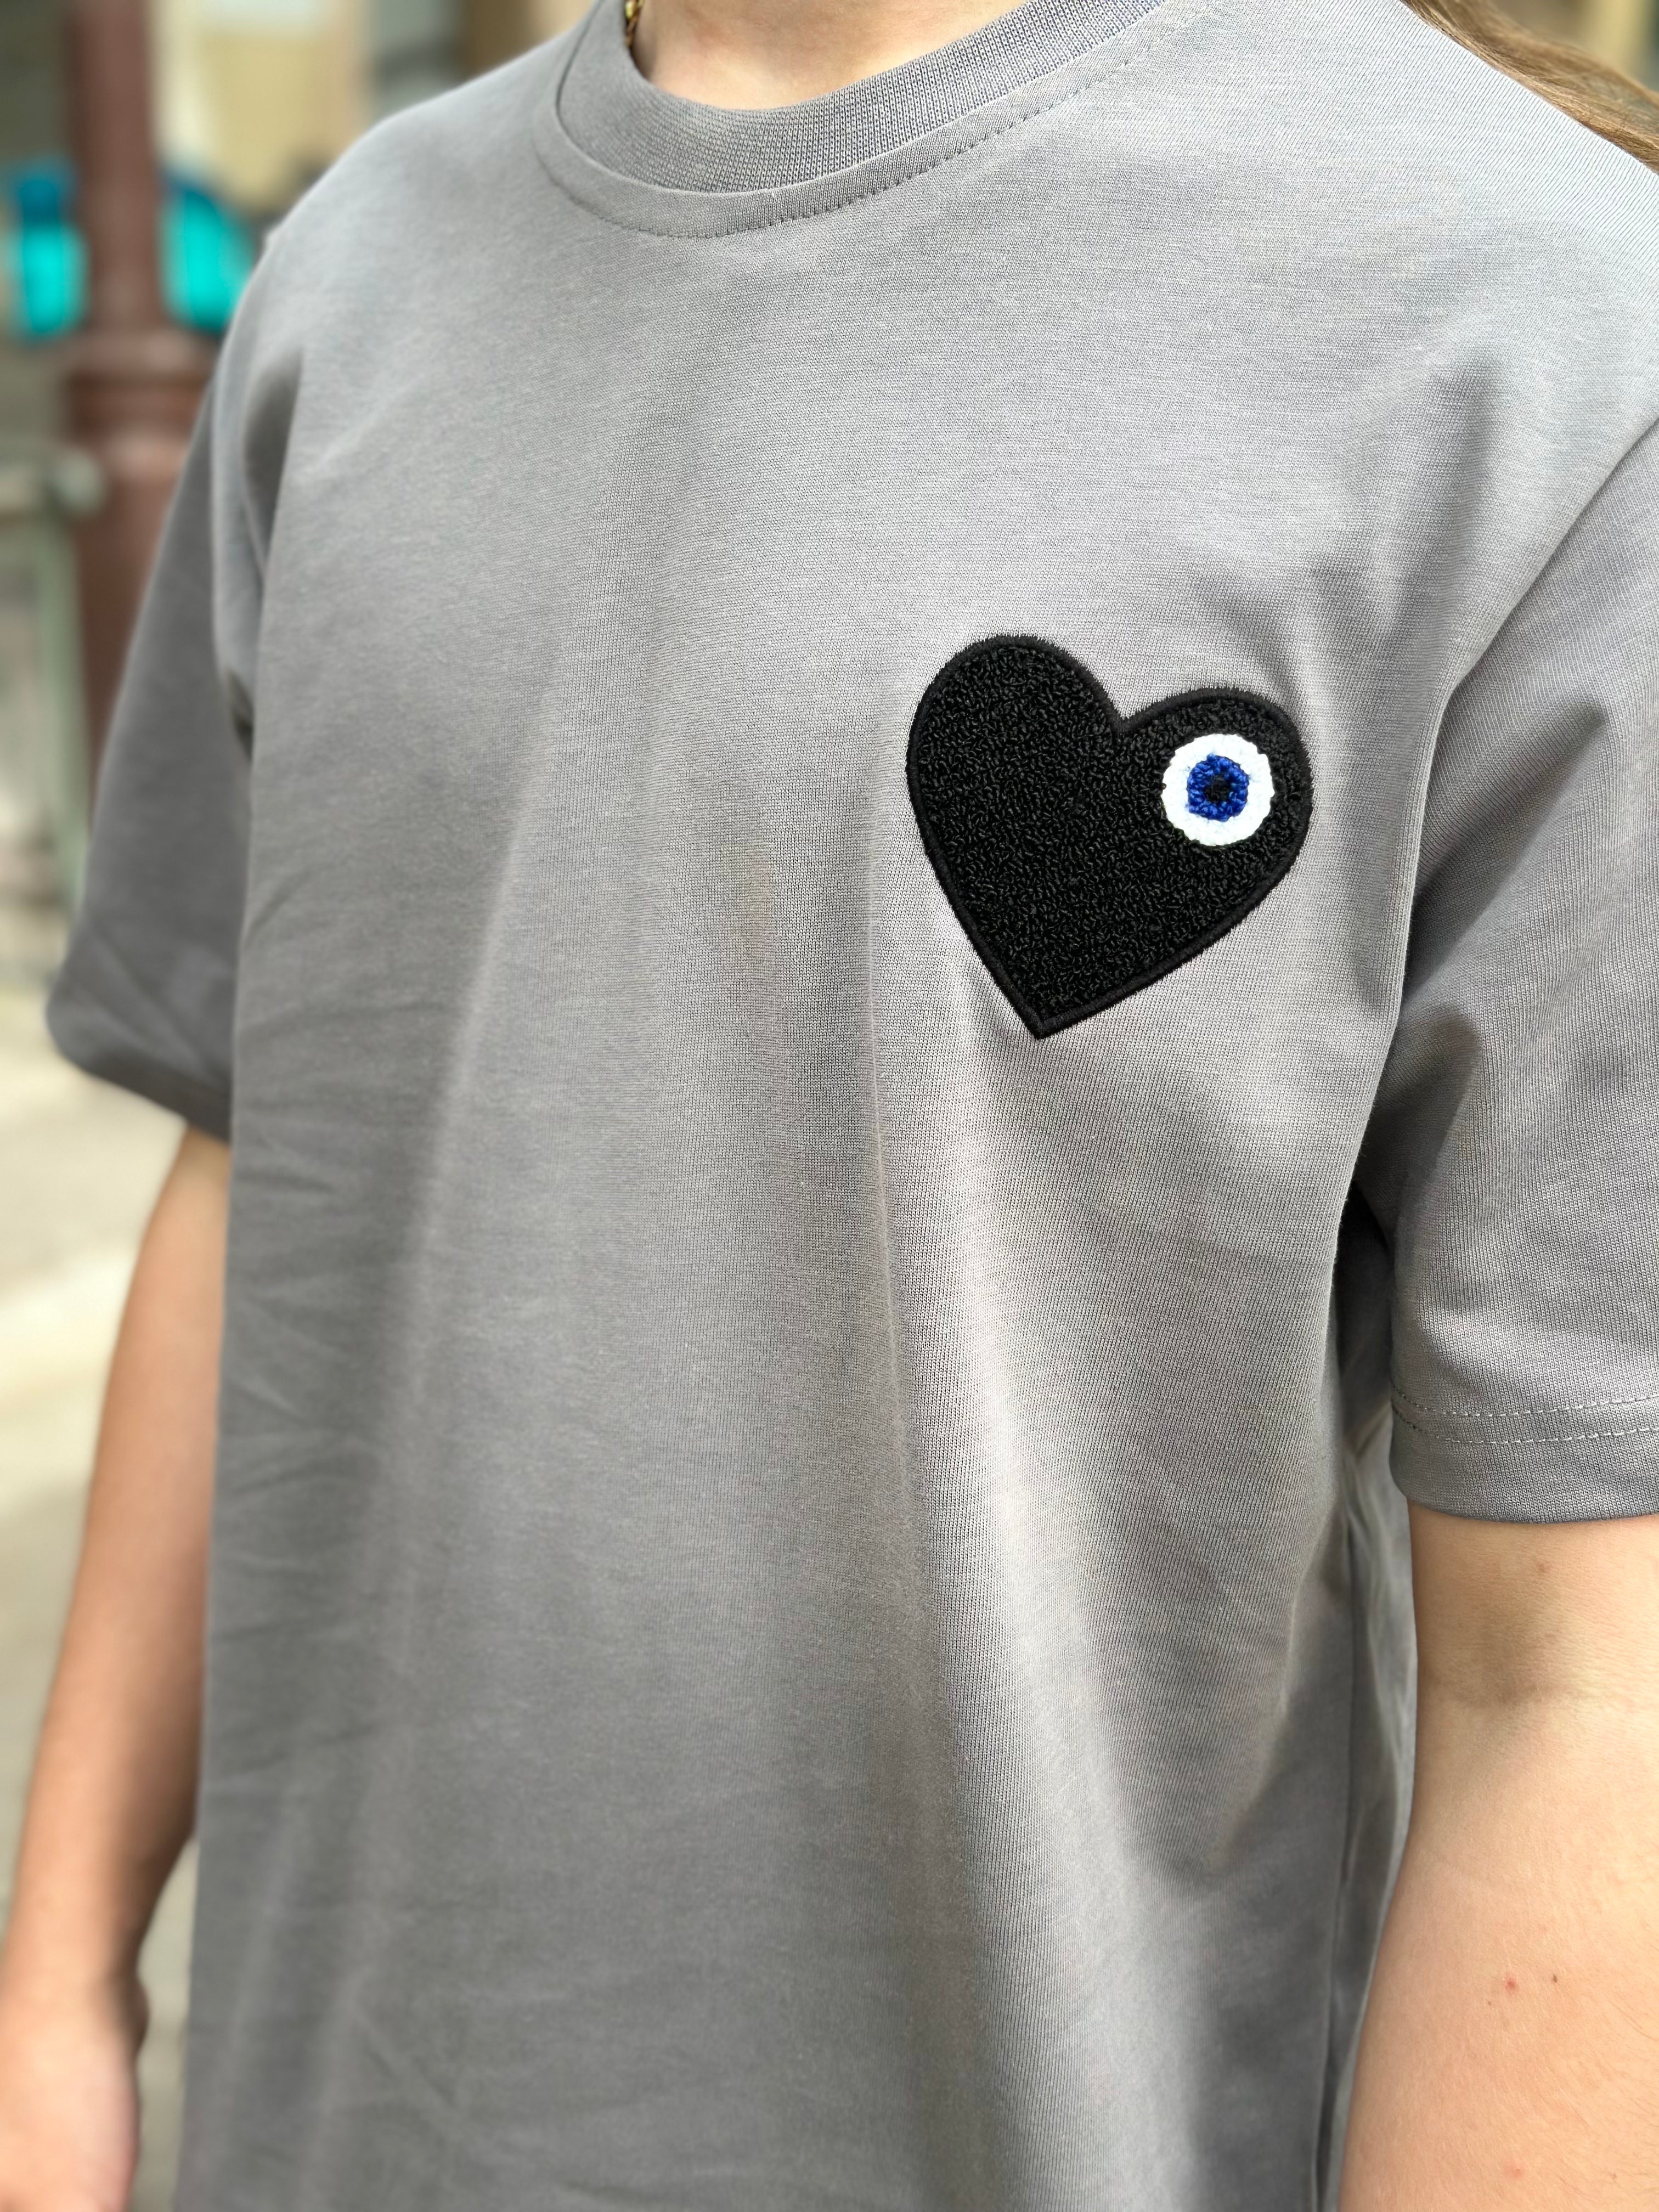 ADJ - Gray t-shirt with black heart